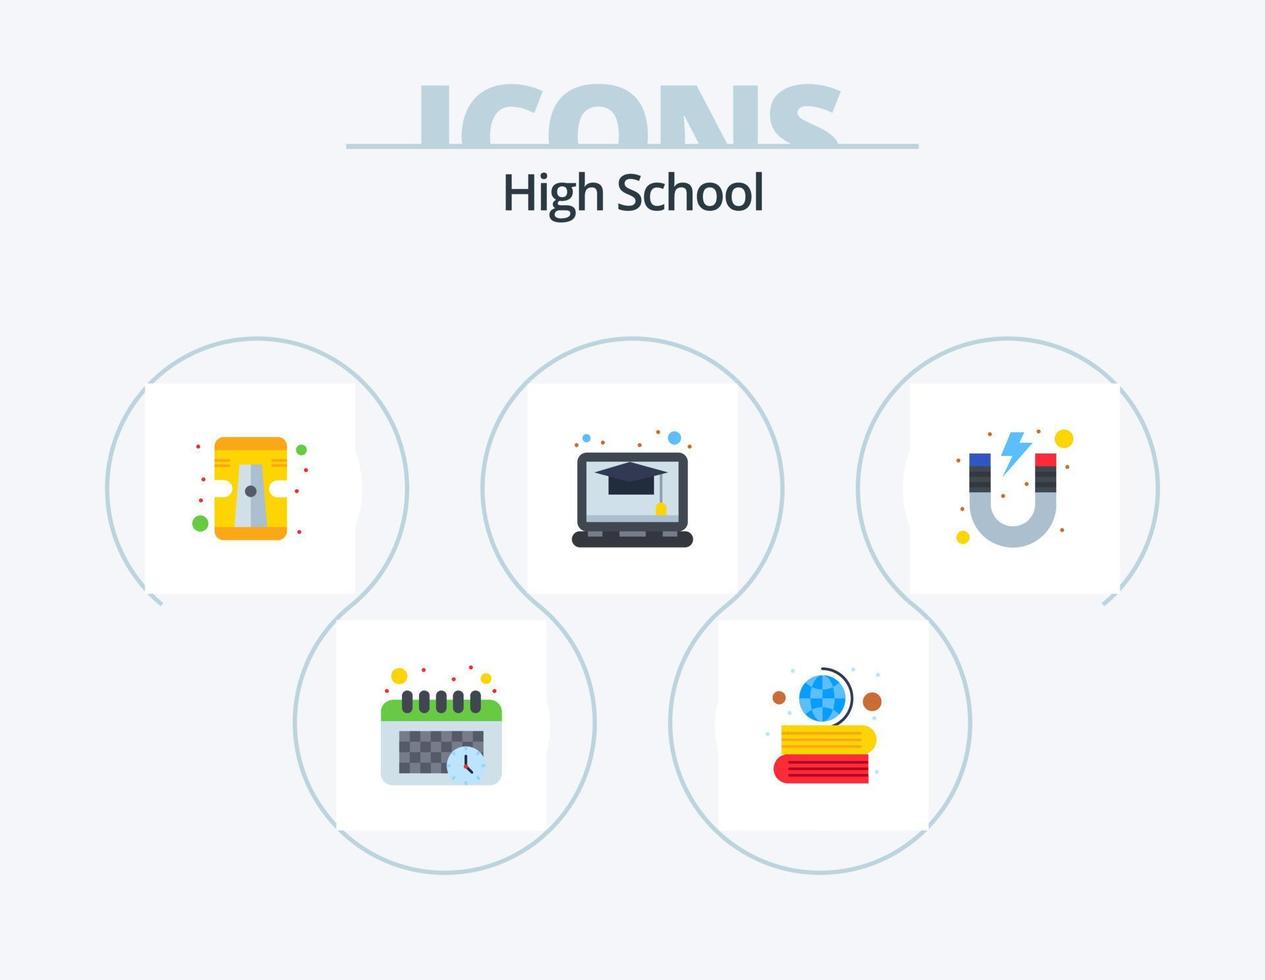 paquete de iconos planos de escuela secundaria 5 diseño de iconos. estudiar. imán. sacapuntas. aprender. estudiar vector